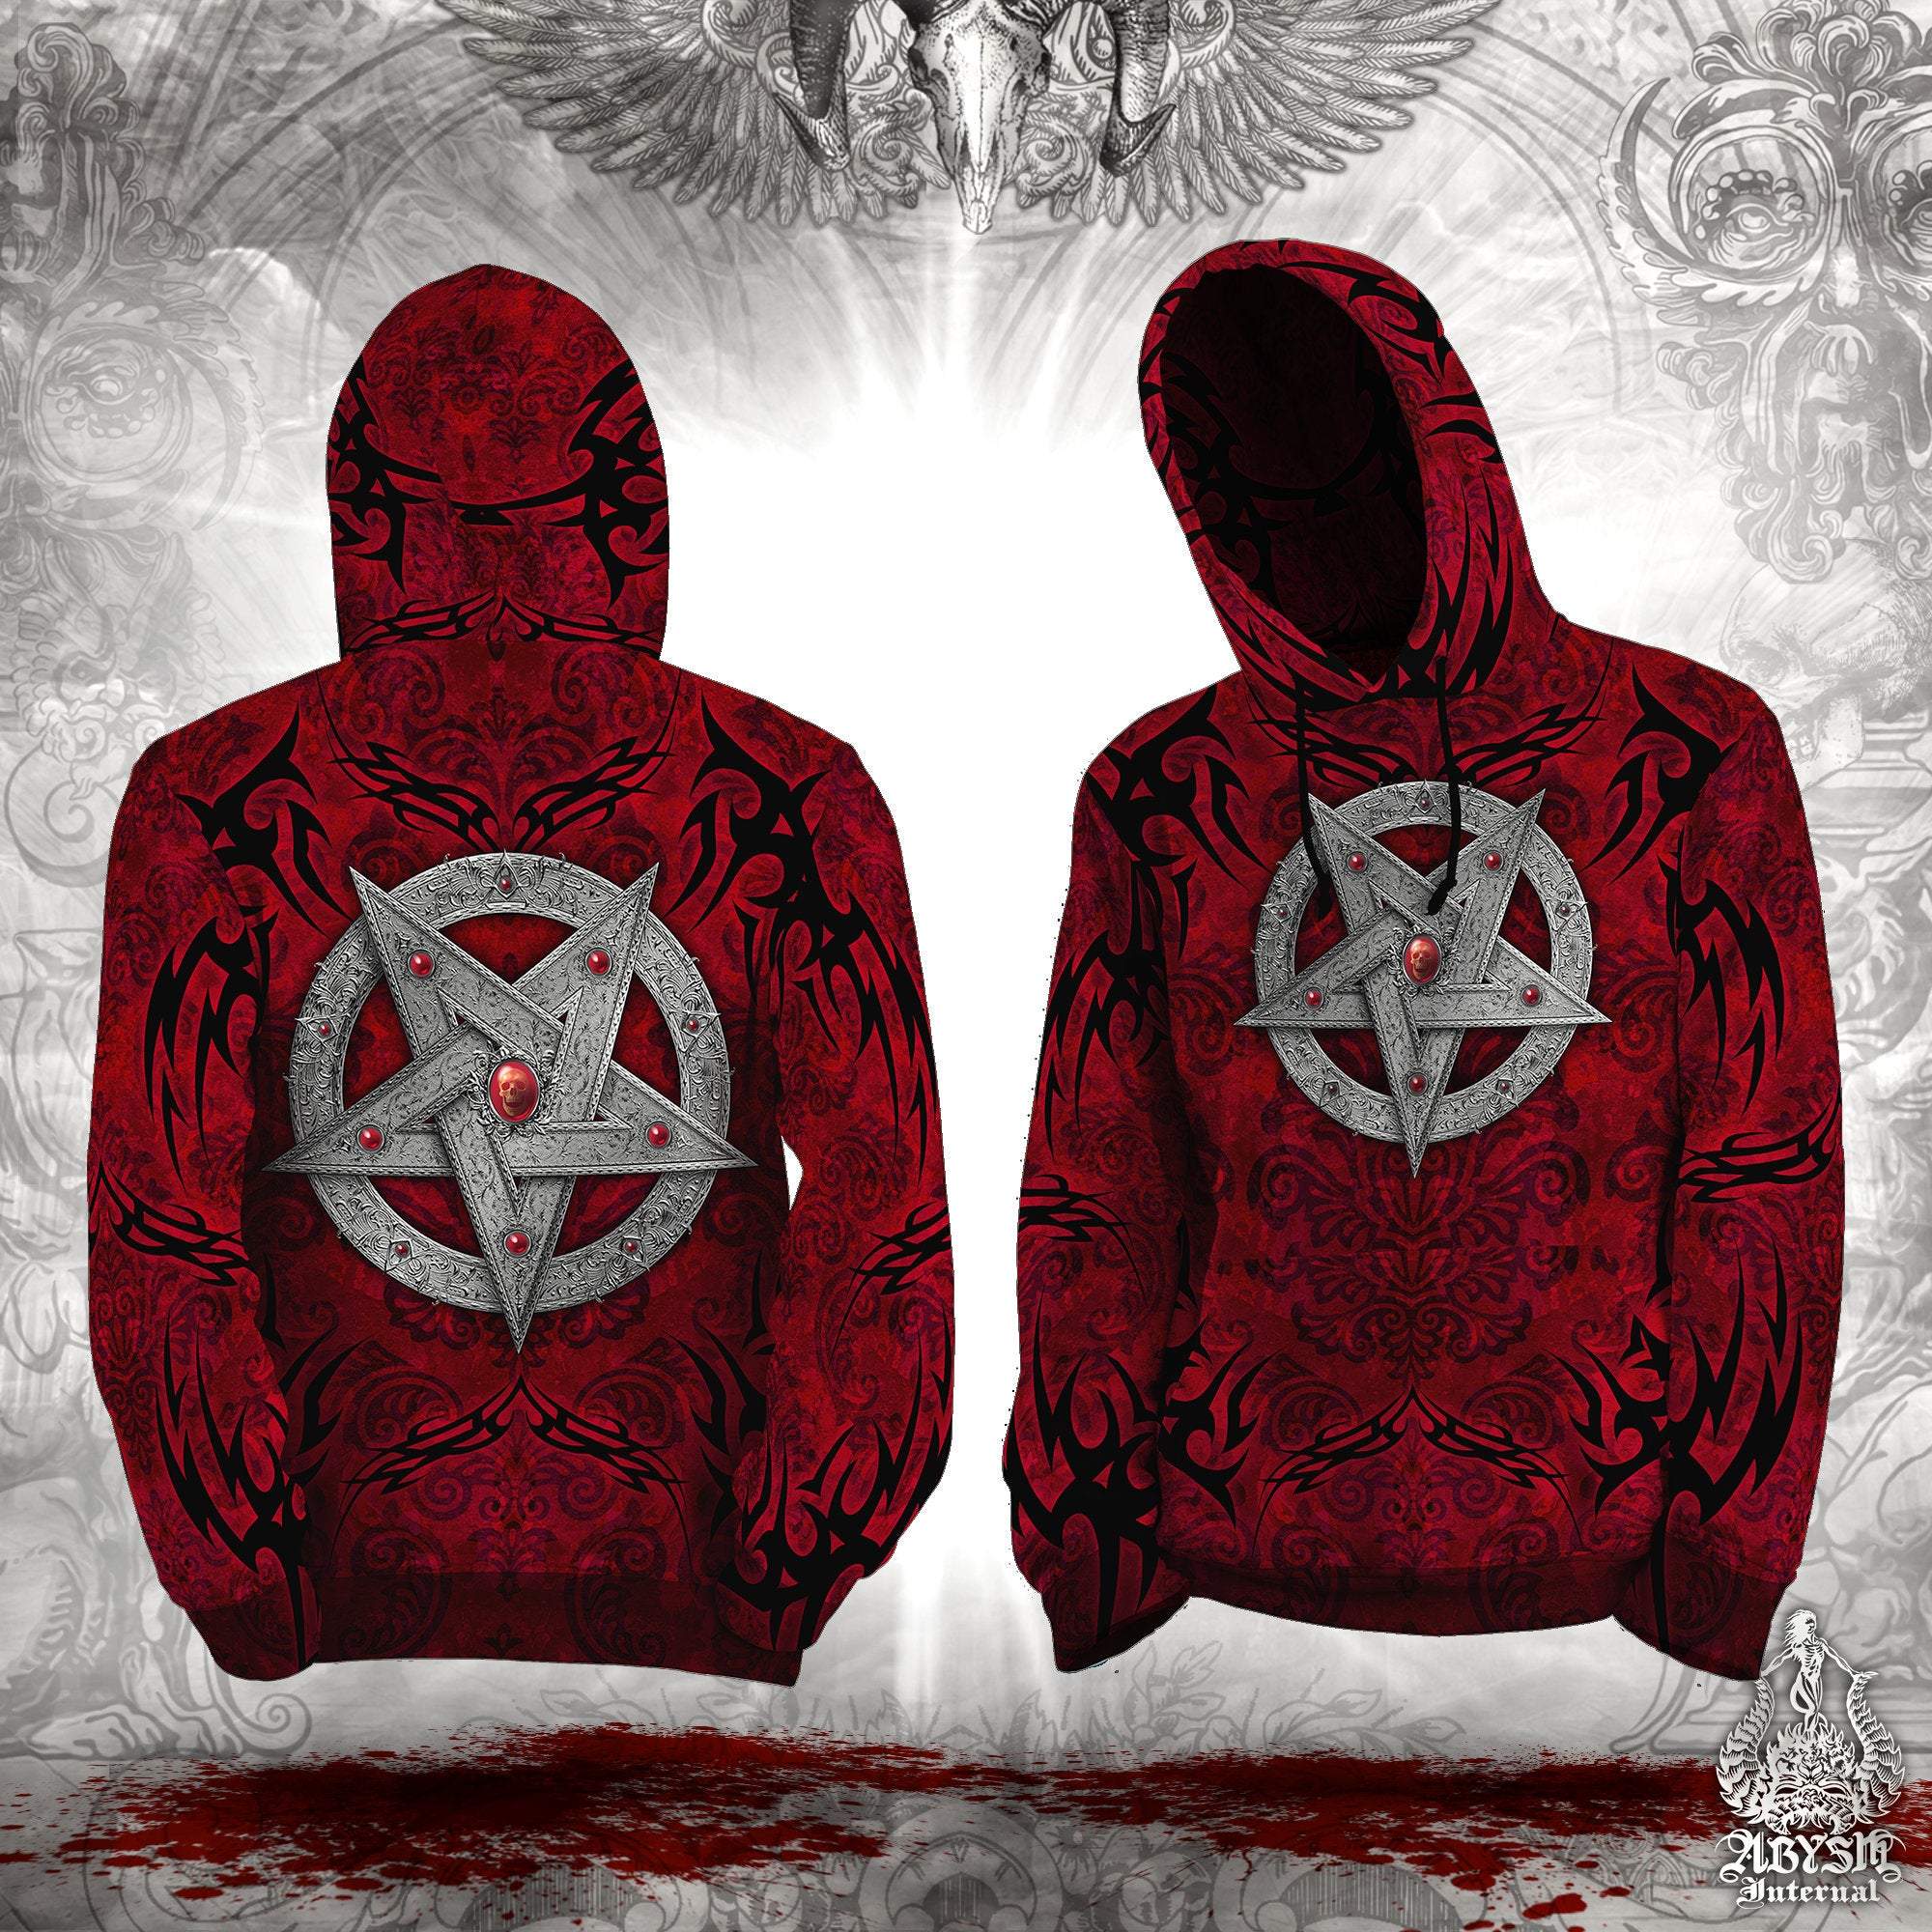 Pentagram Hoodie, Black Metal Streetwear, Gothic Sweater, Satanic Goth, Alternative Clothing, Unisex - Silver Red - Abysm Internal